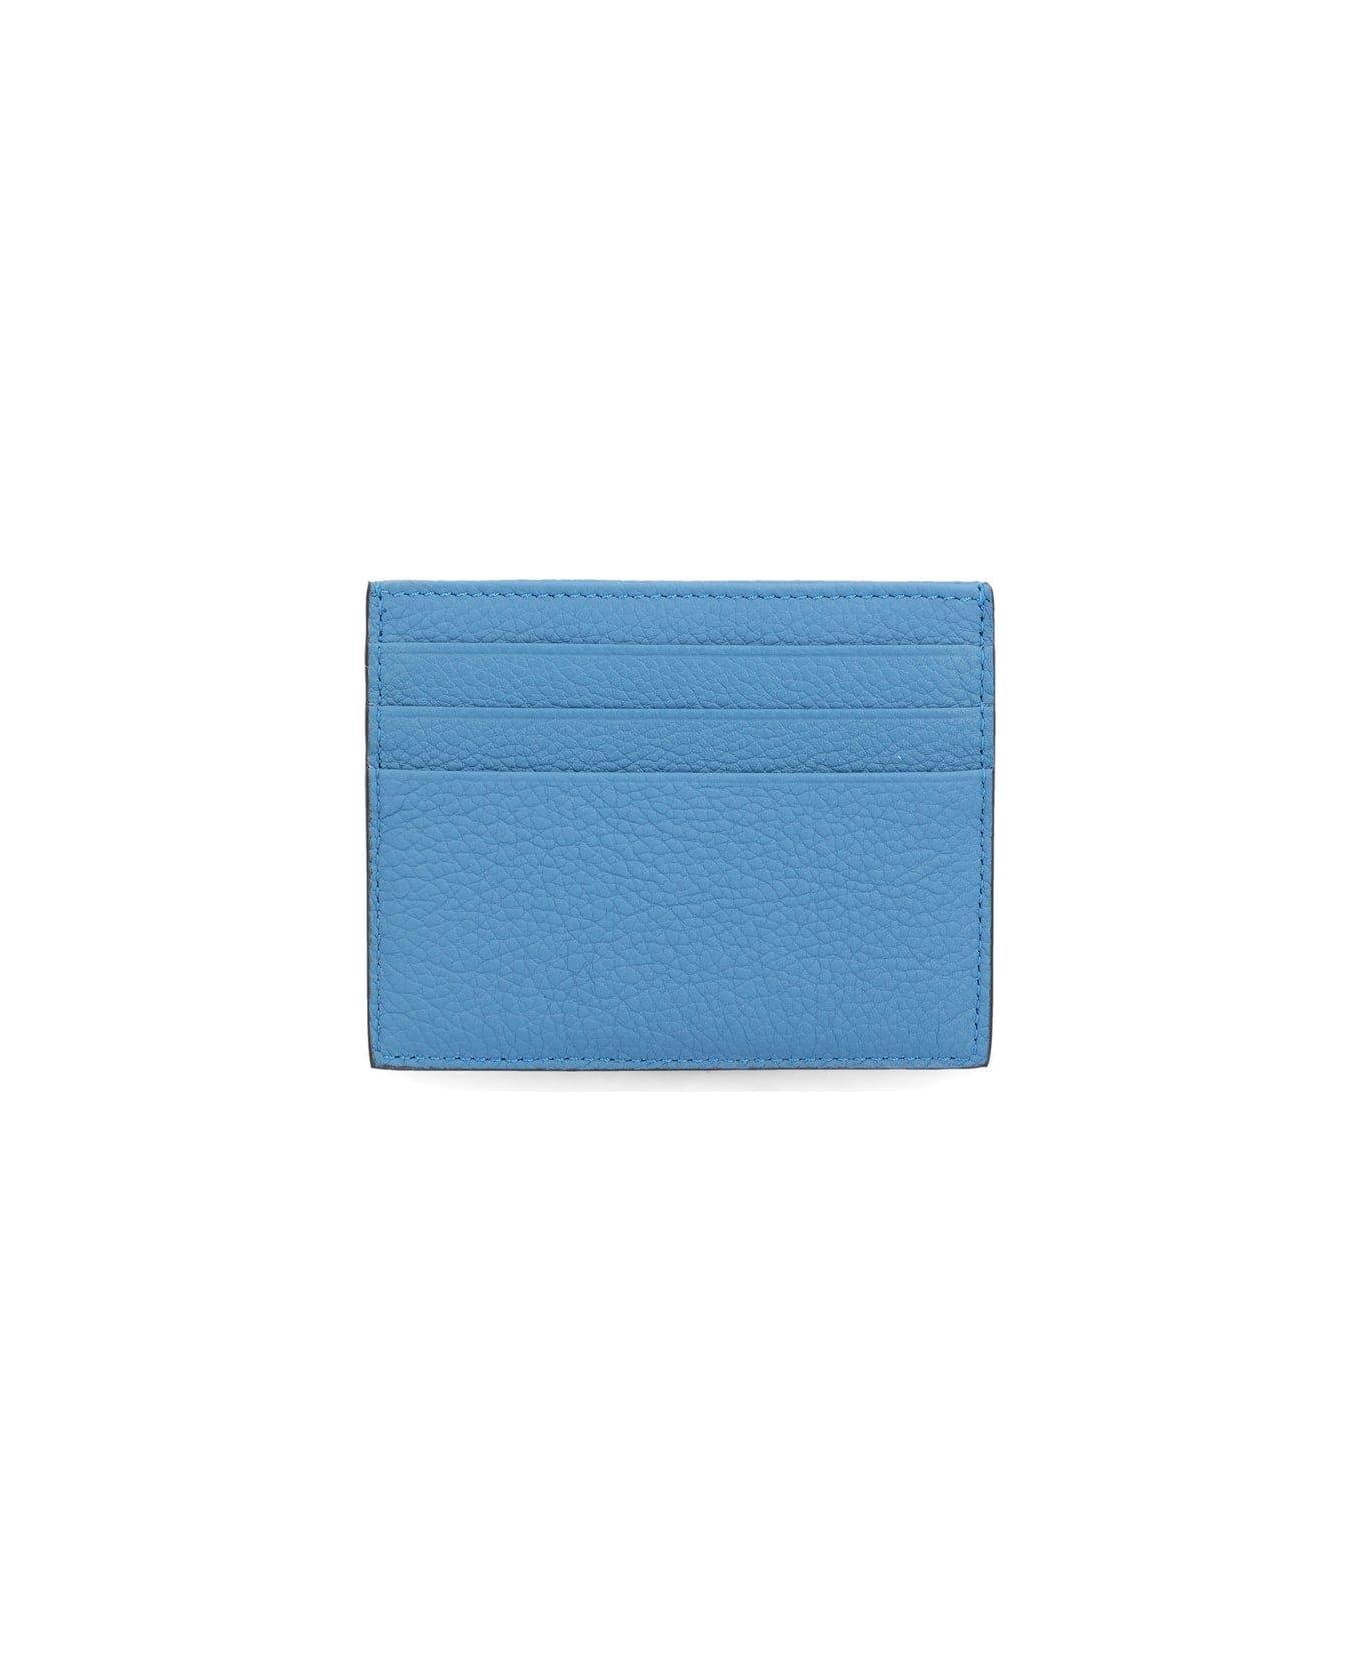 Fendi Signature Card Holder - Light blue 財布